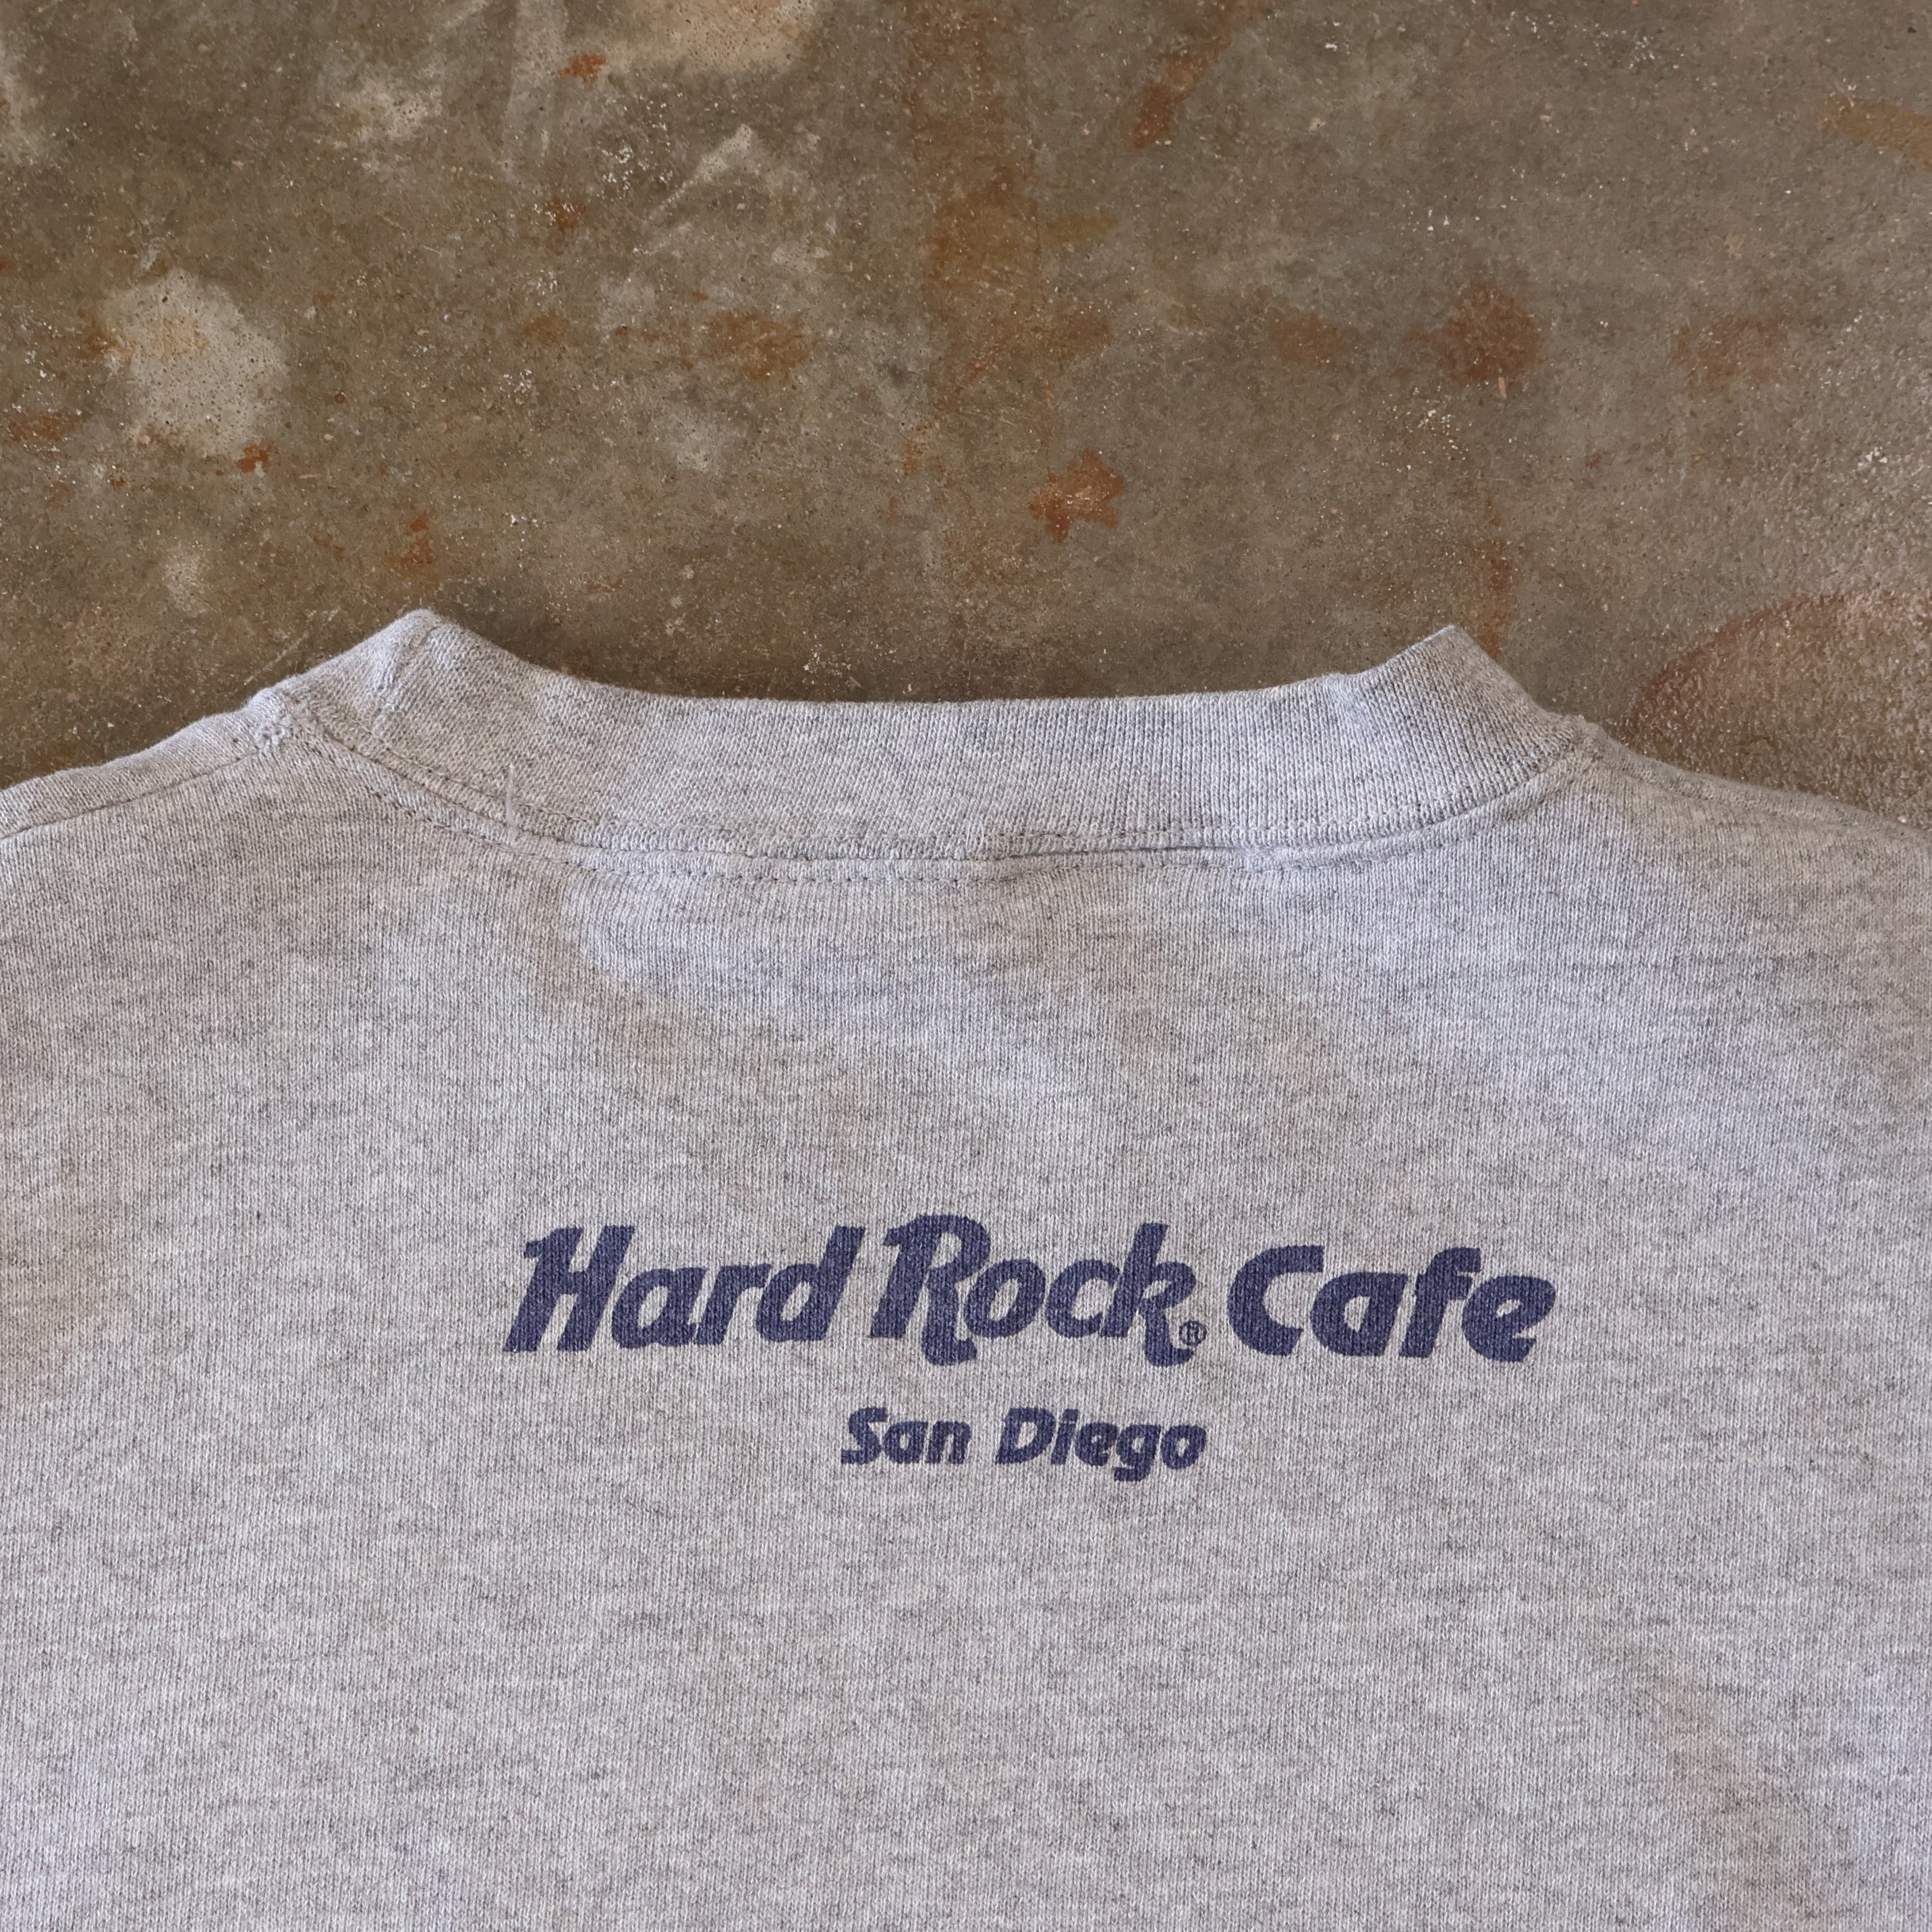 Gray Hard Rock Puff Print Sweatshirt (XL)